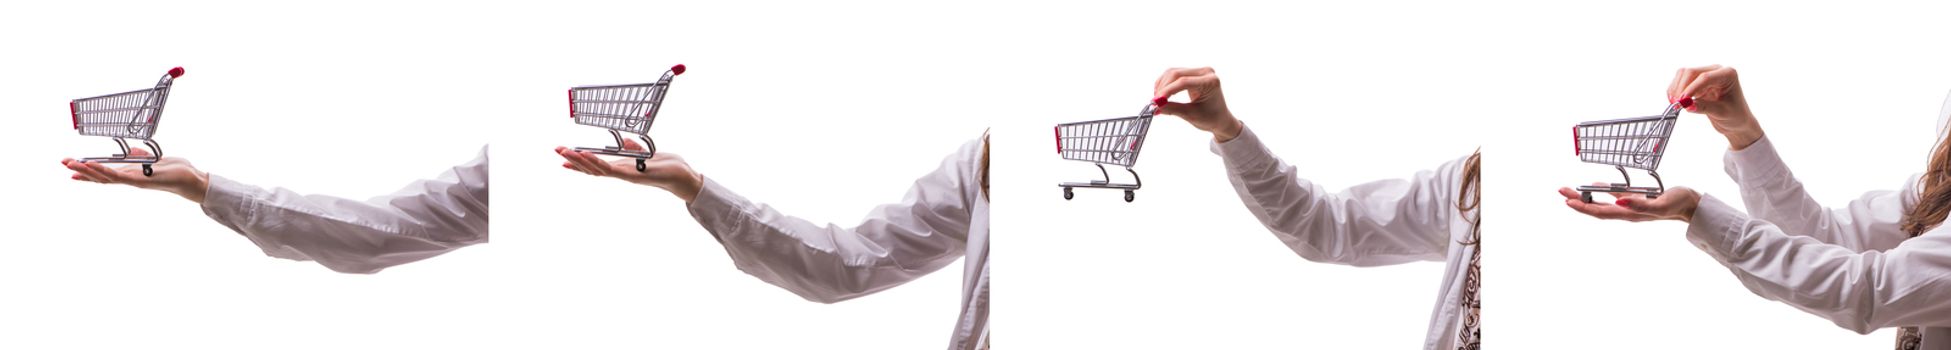 Hand holding shopping cart isolated on white